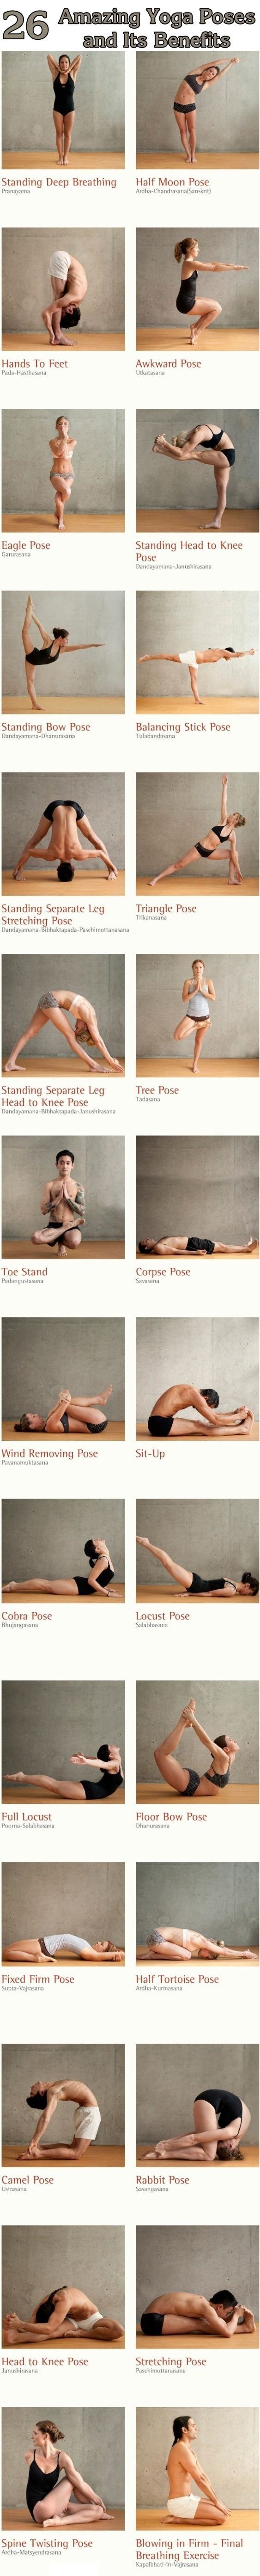 Yoga poses for wellness